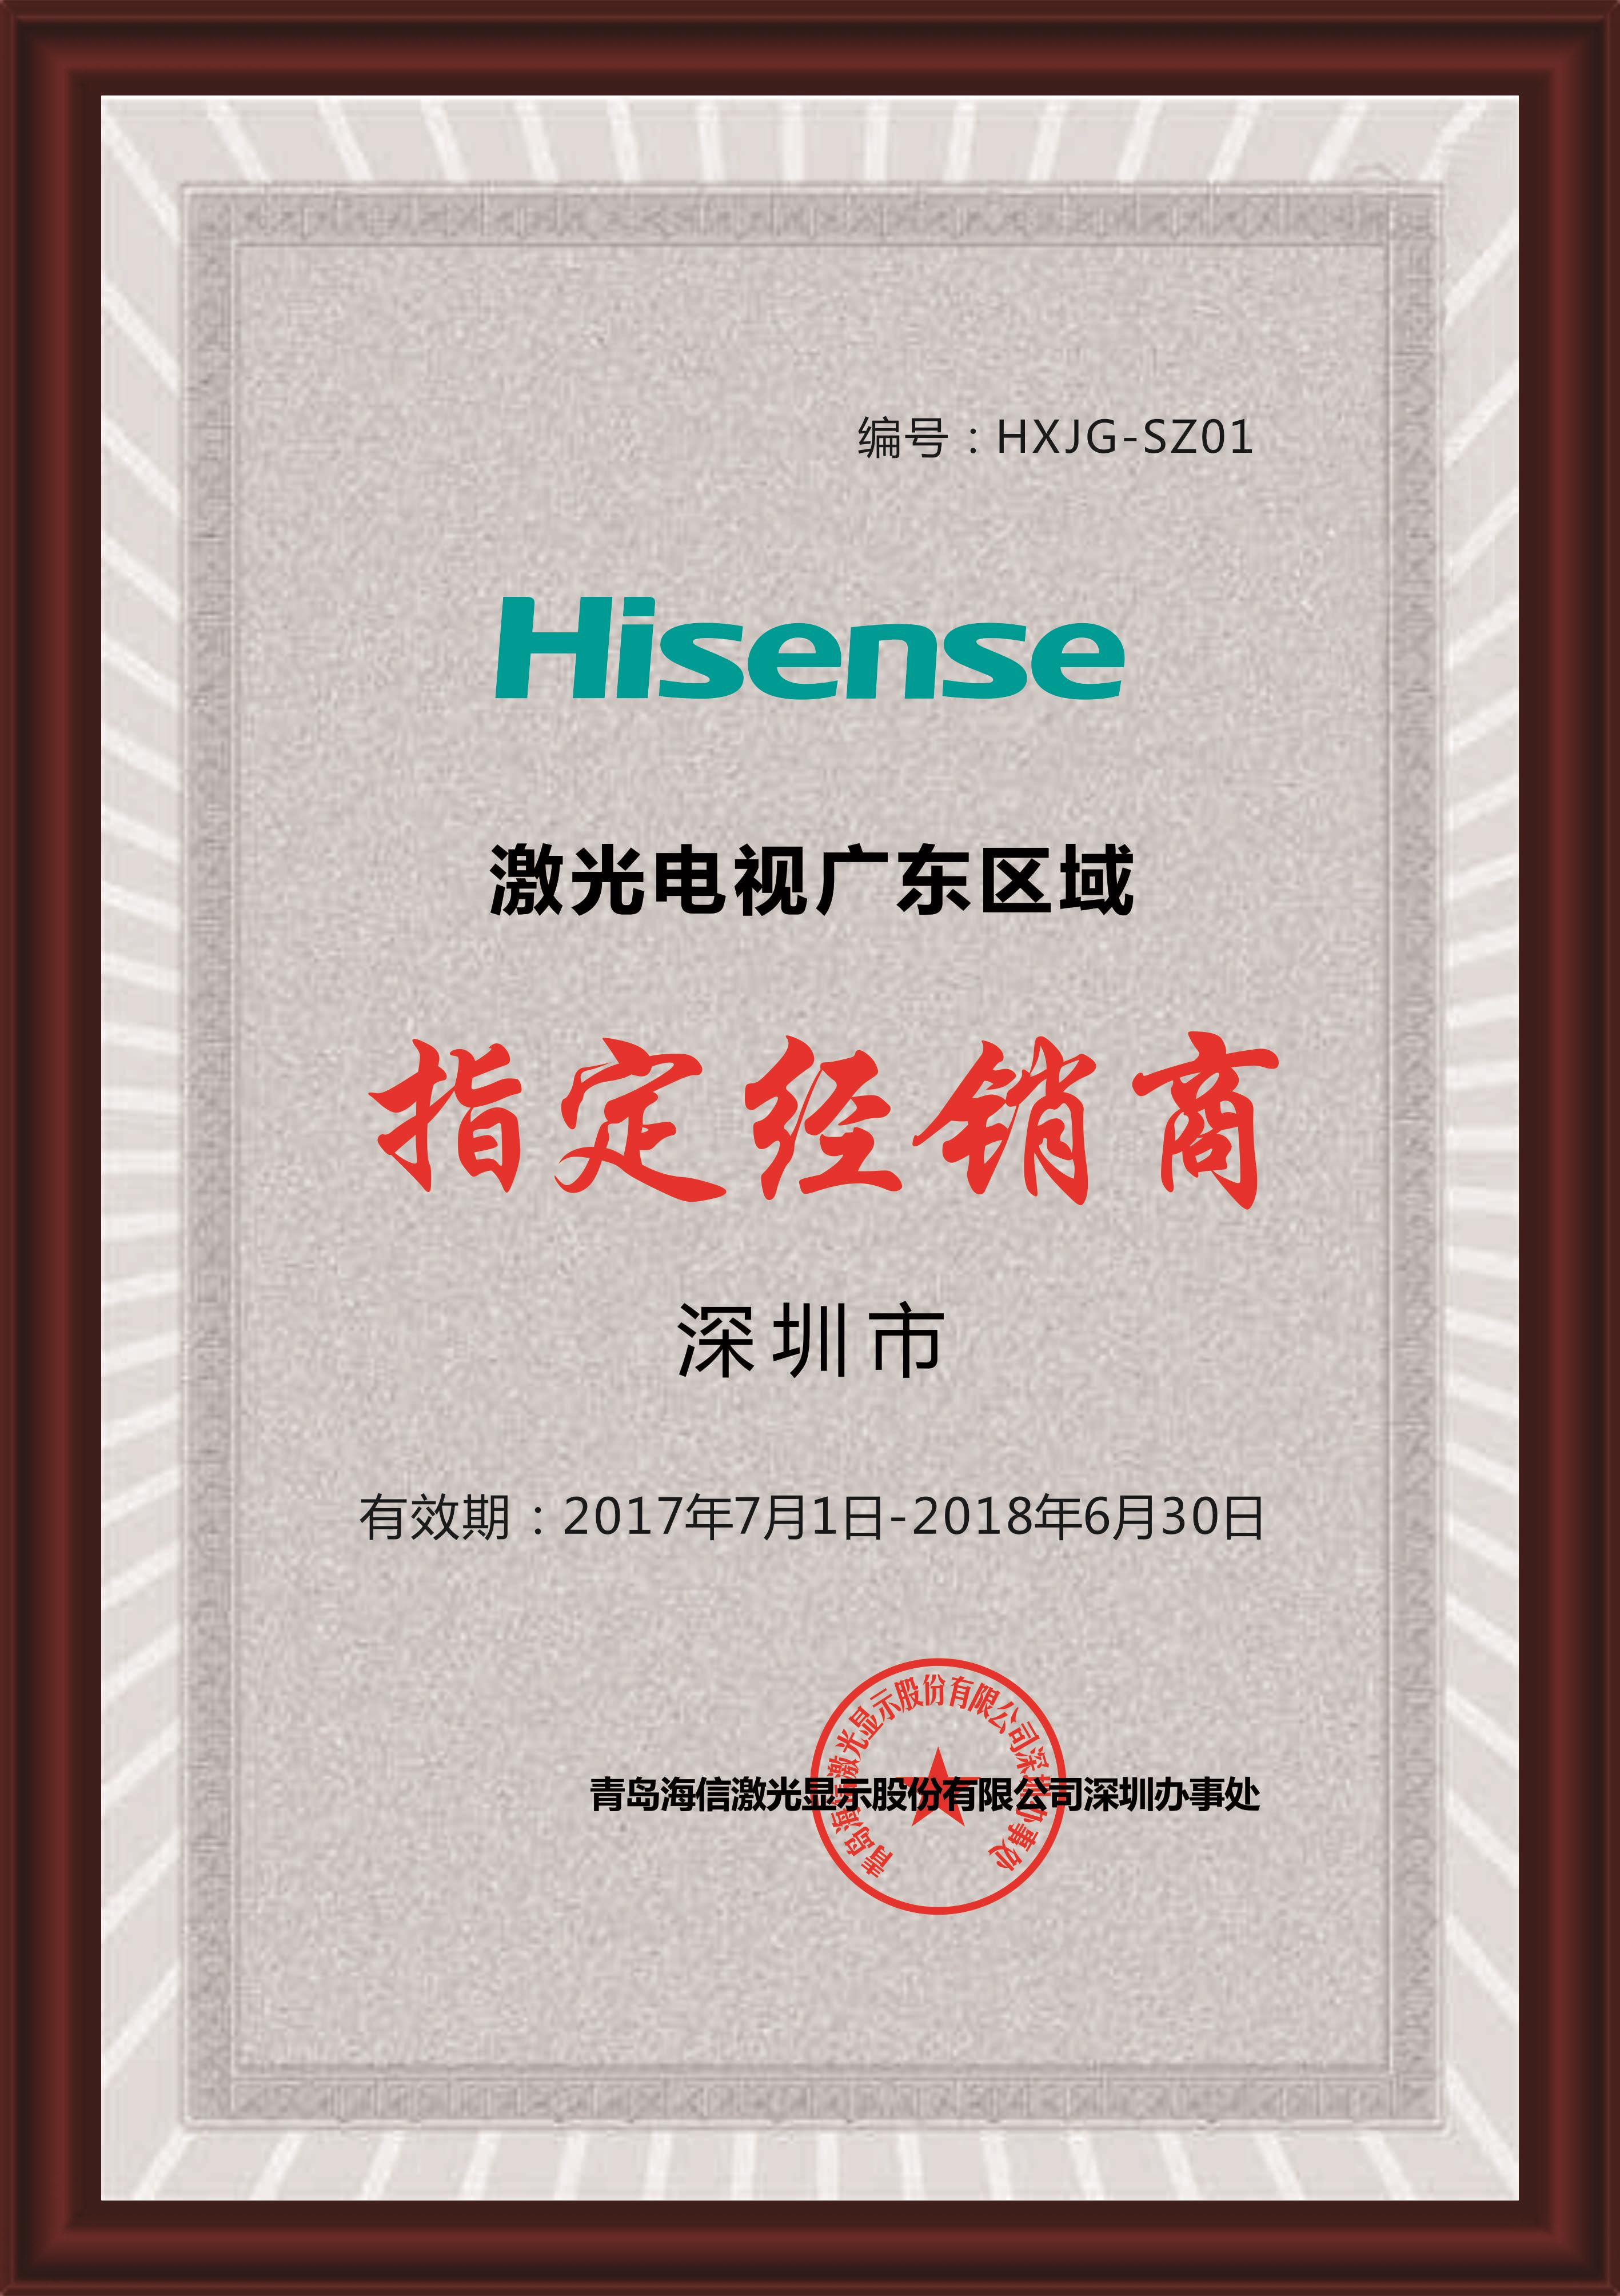 Hisense激光电视广东东莞市区域指定经销商